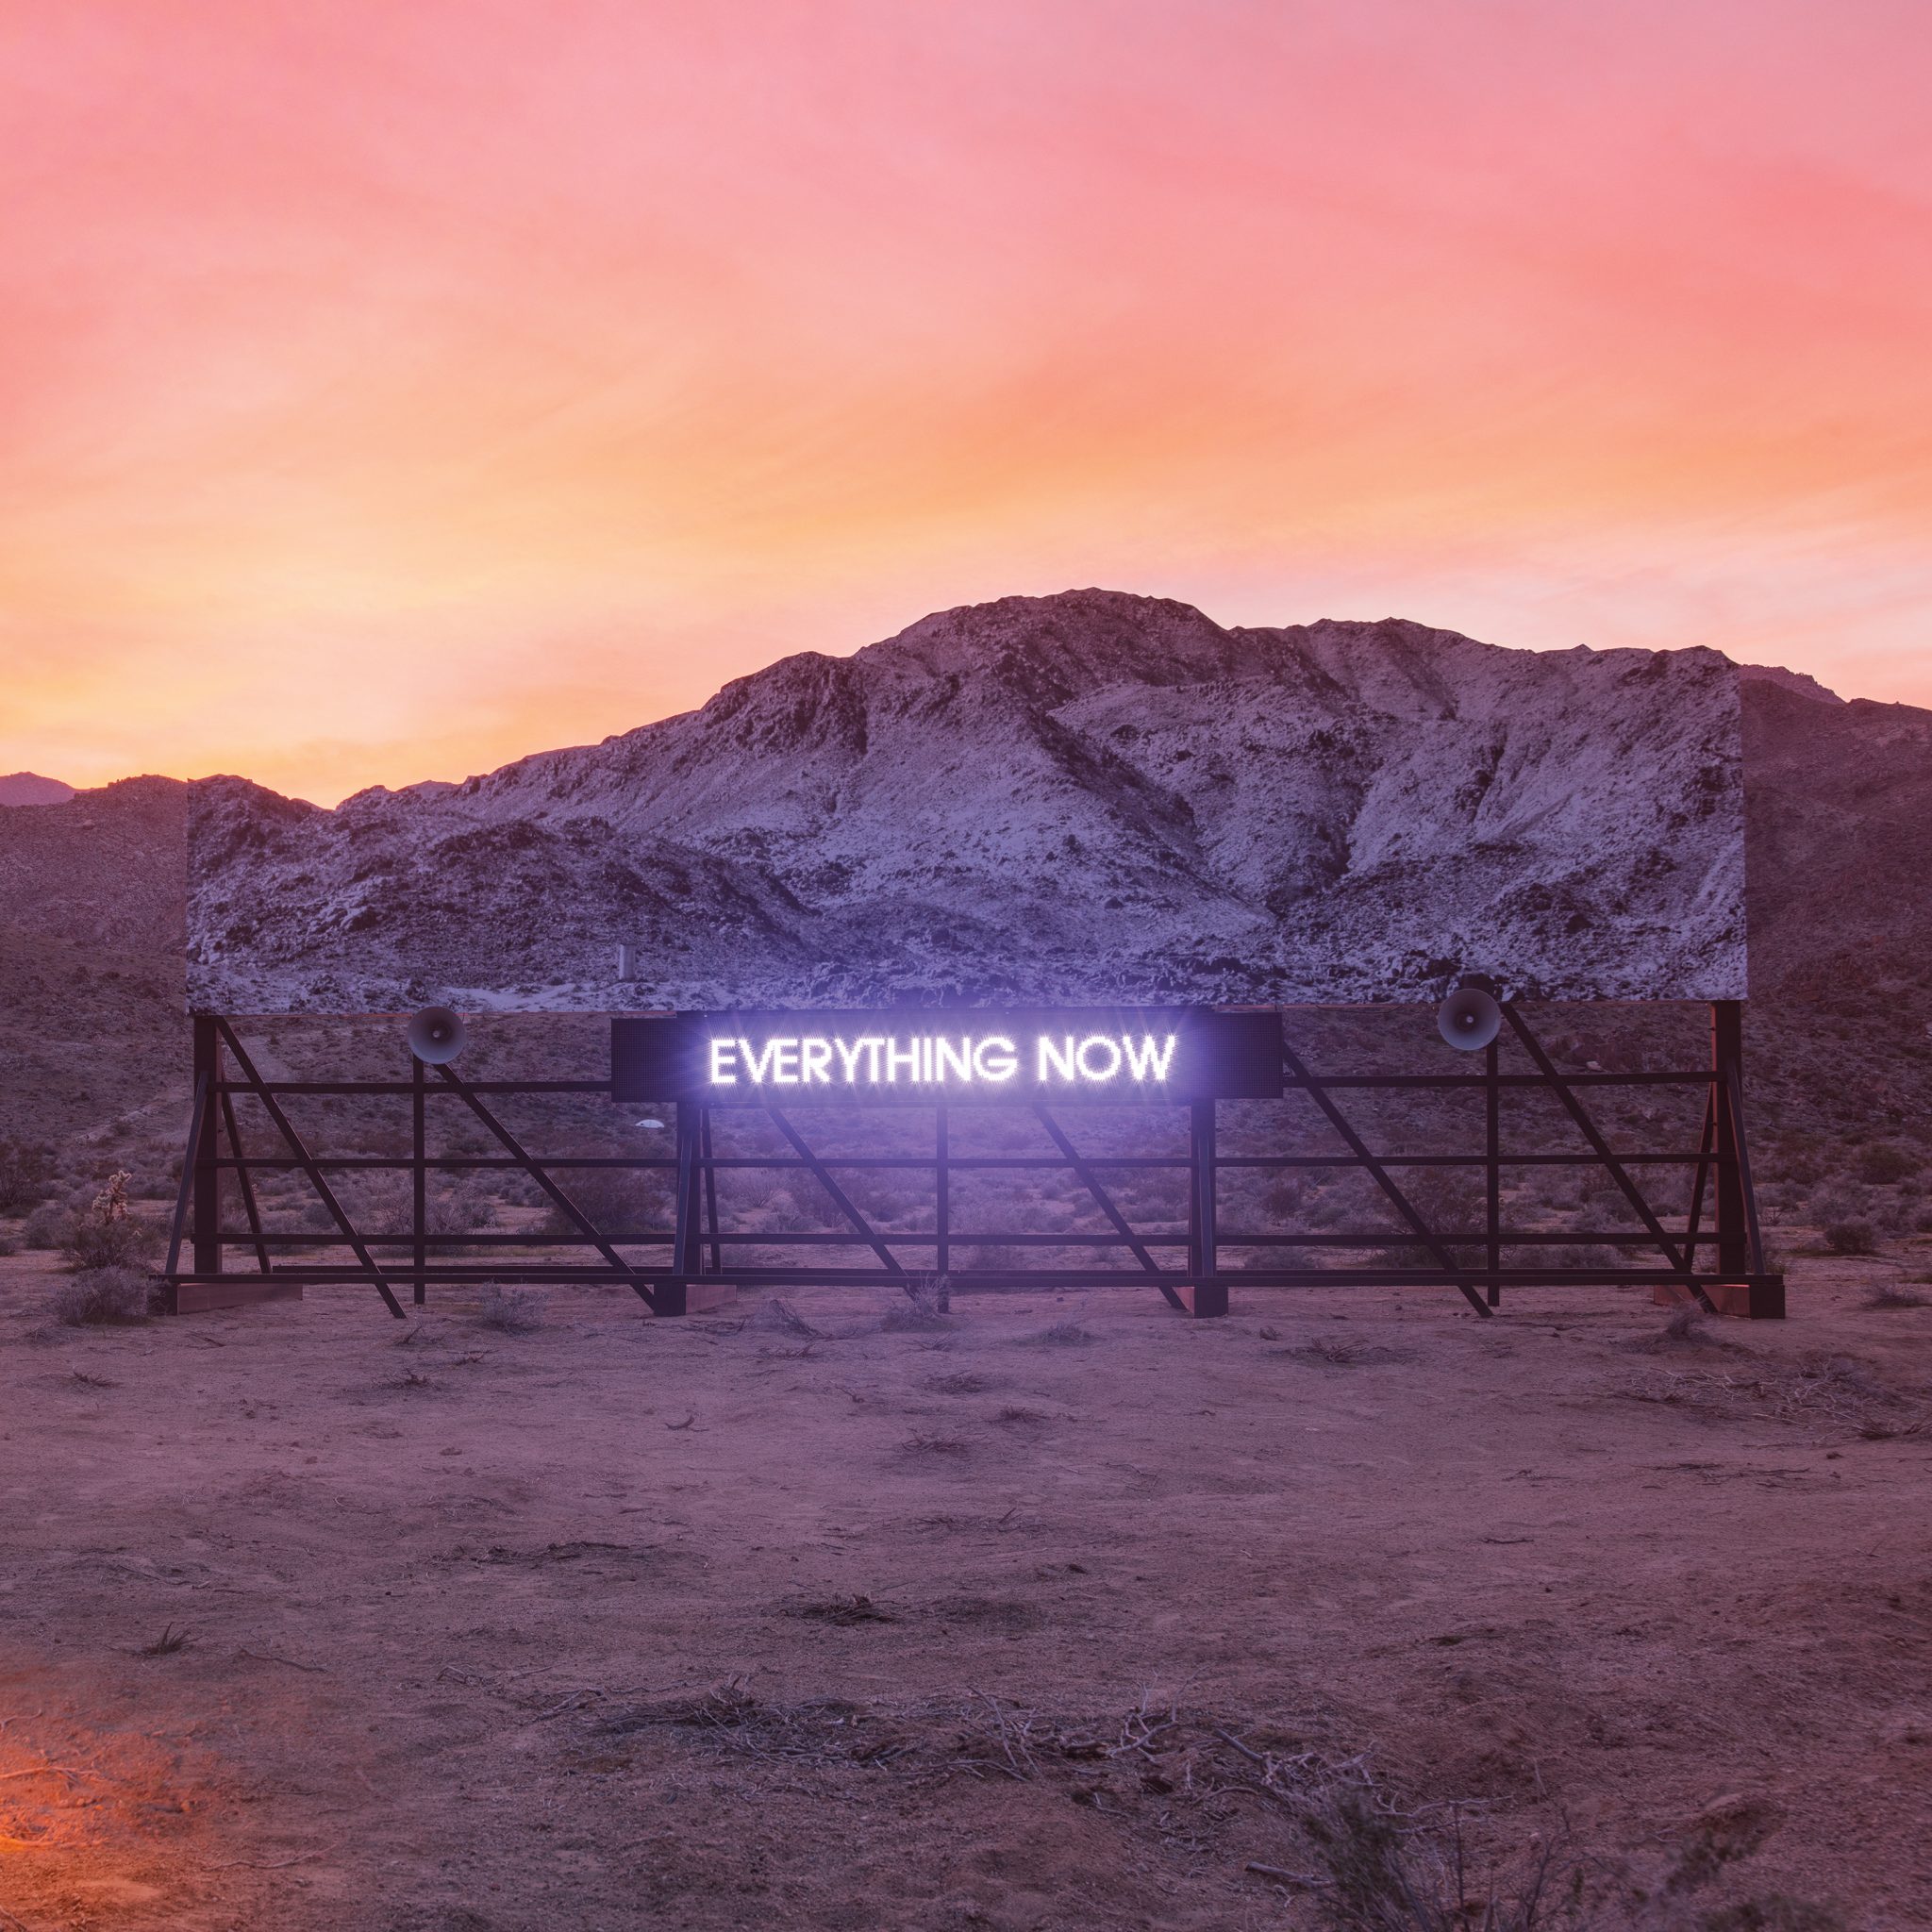 ALBUM REVIEW: Arcade Fire - "Everything Now" 